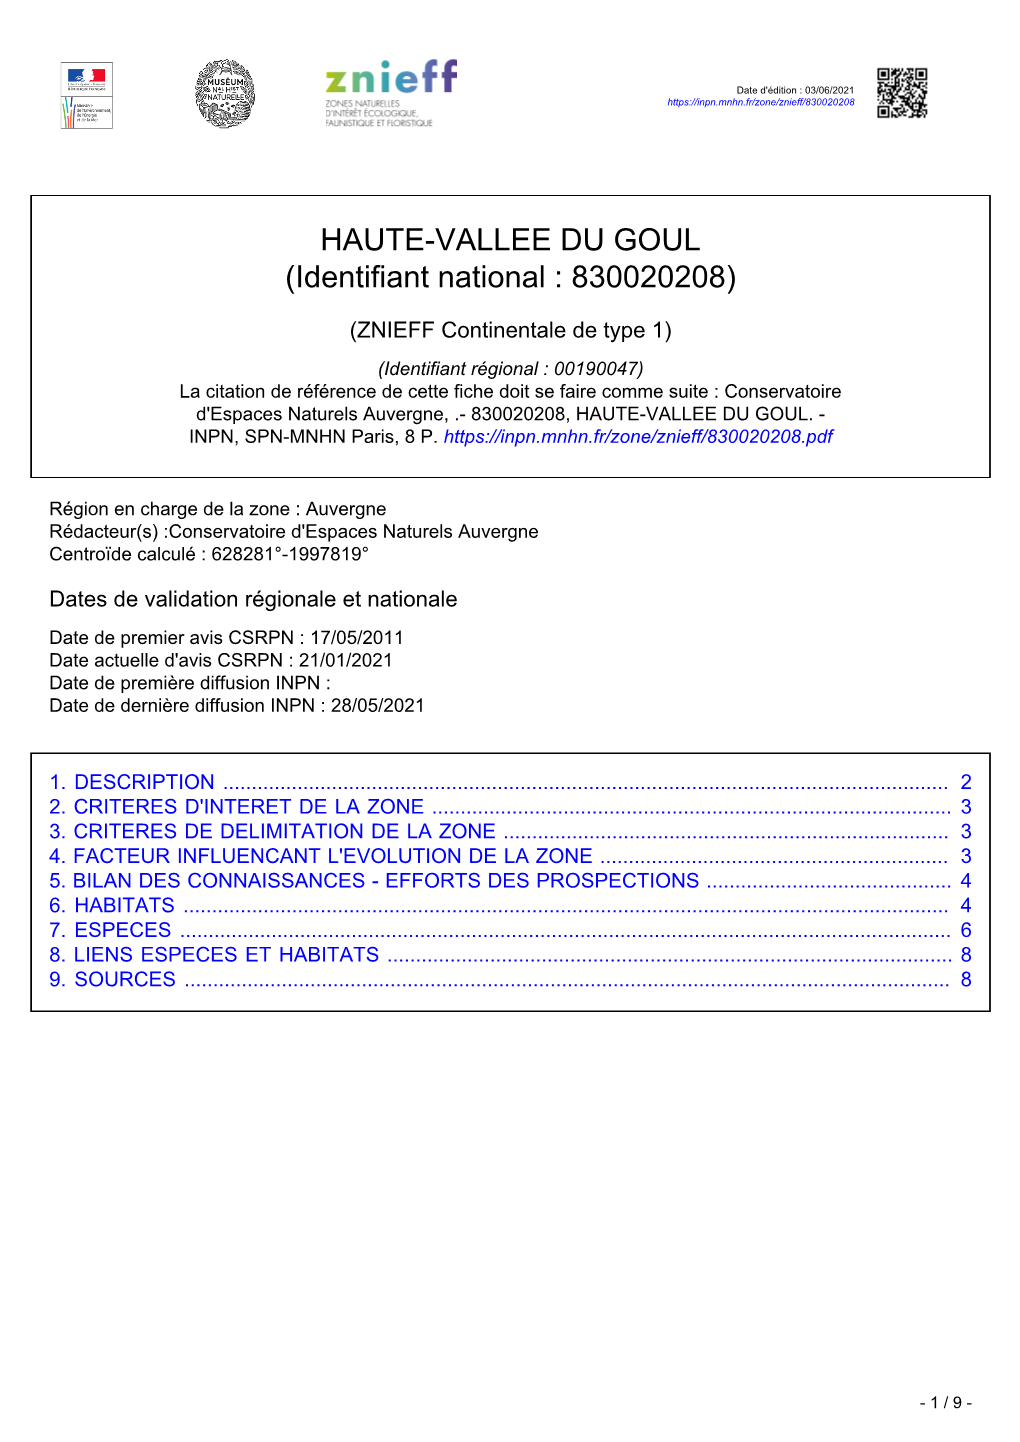 HAUTE-VALLEE DU GOUL (Identifiant National : 830020208)